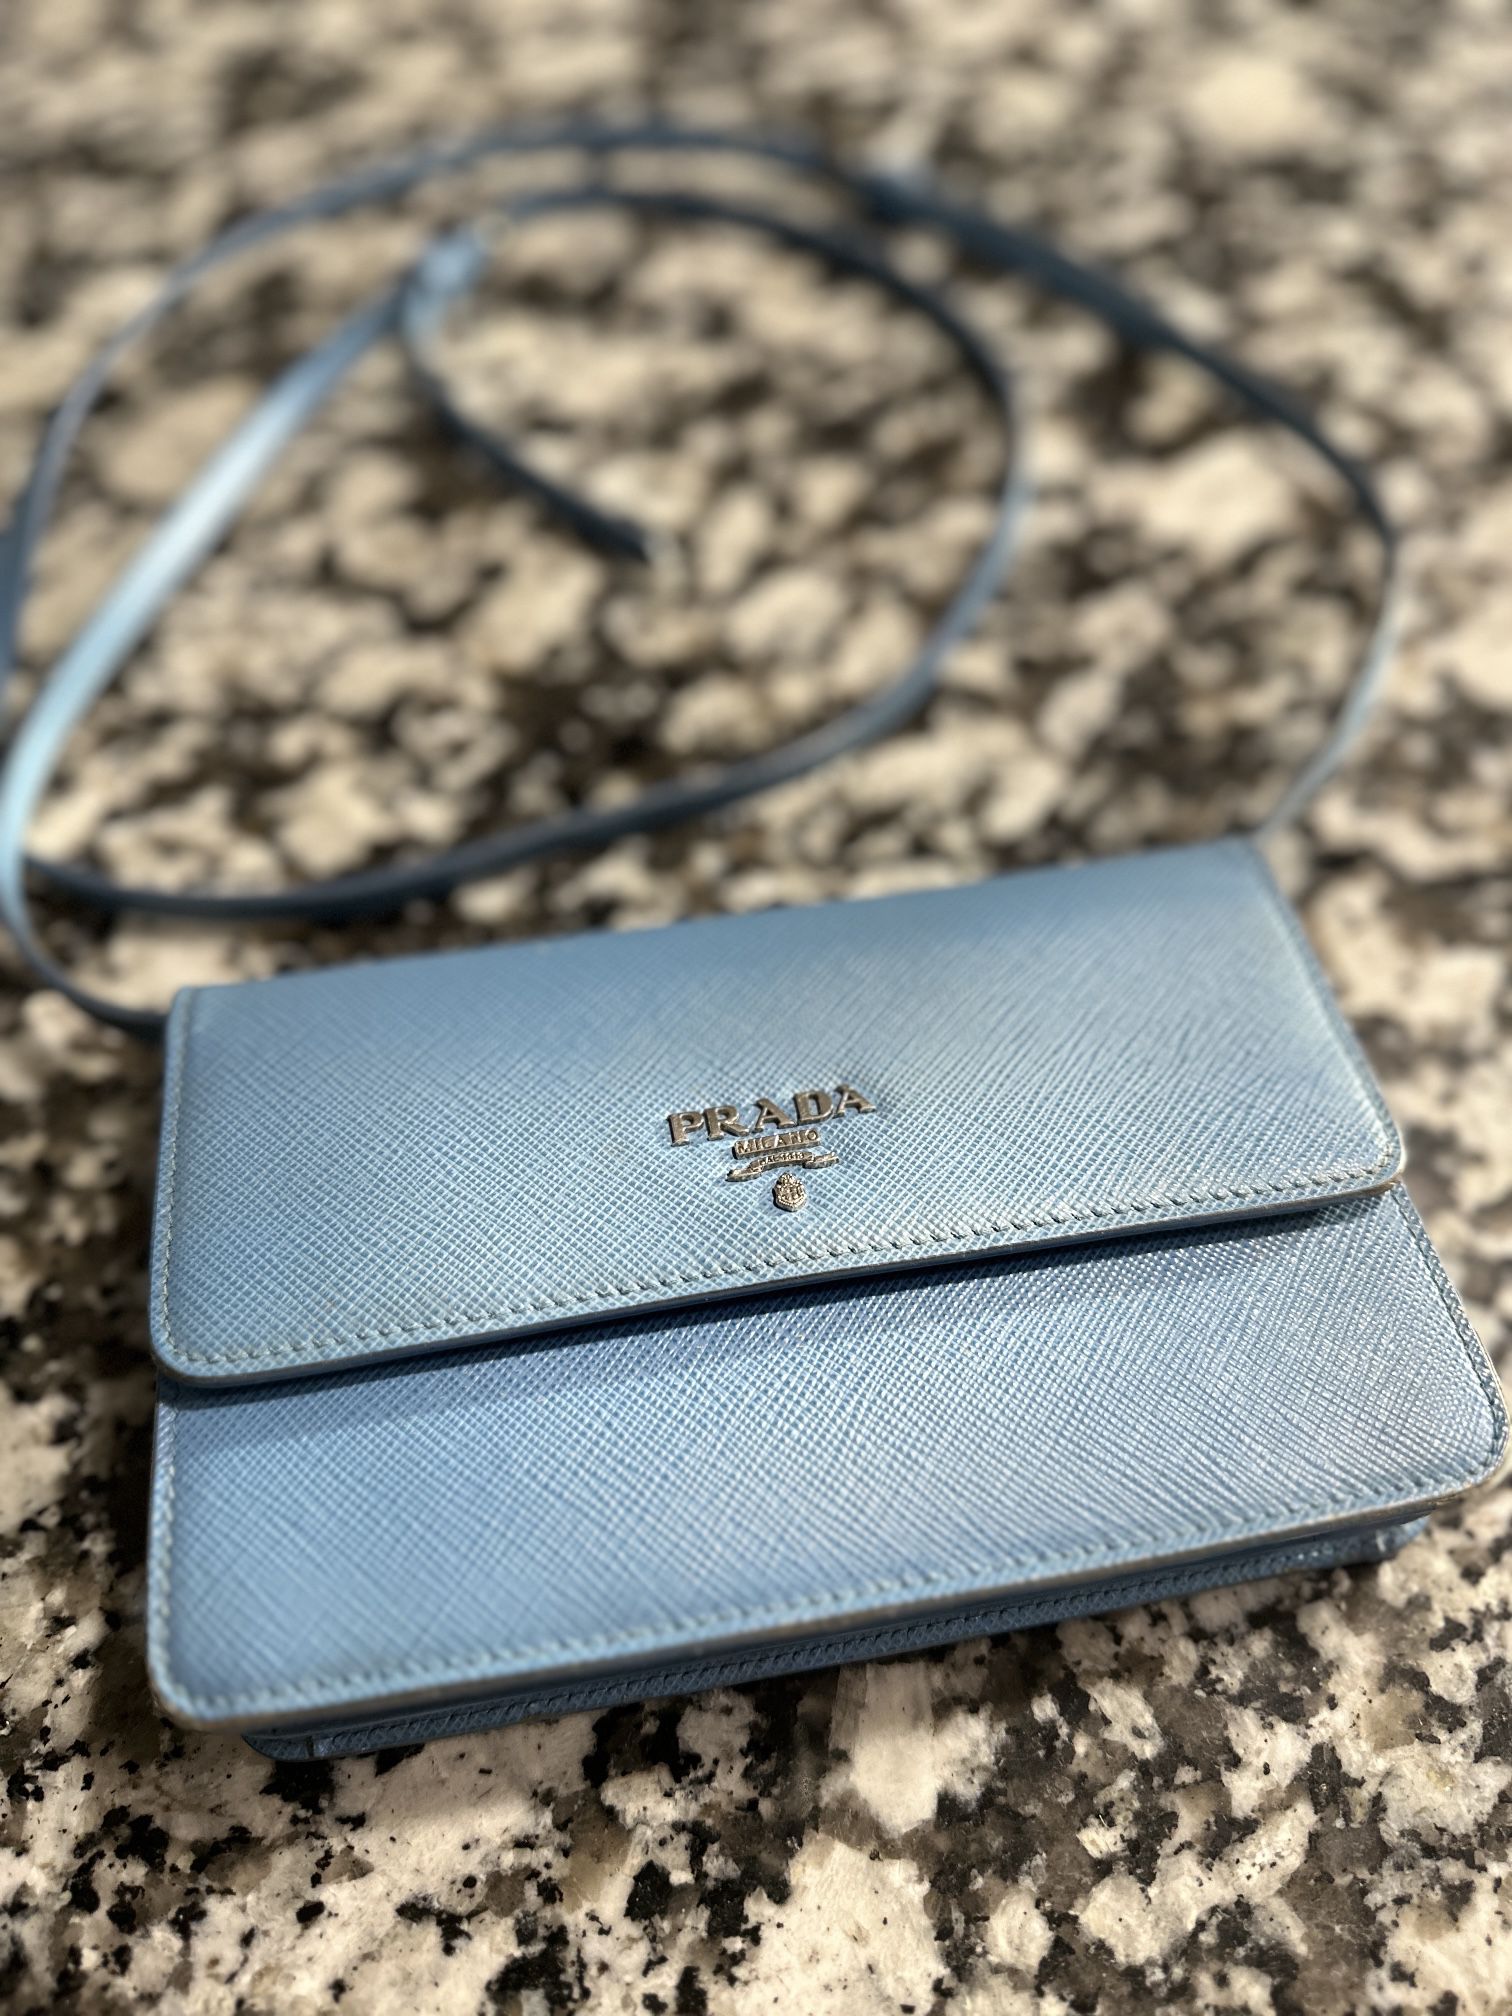 Authentic Prada Wallet Crossbody Bag